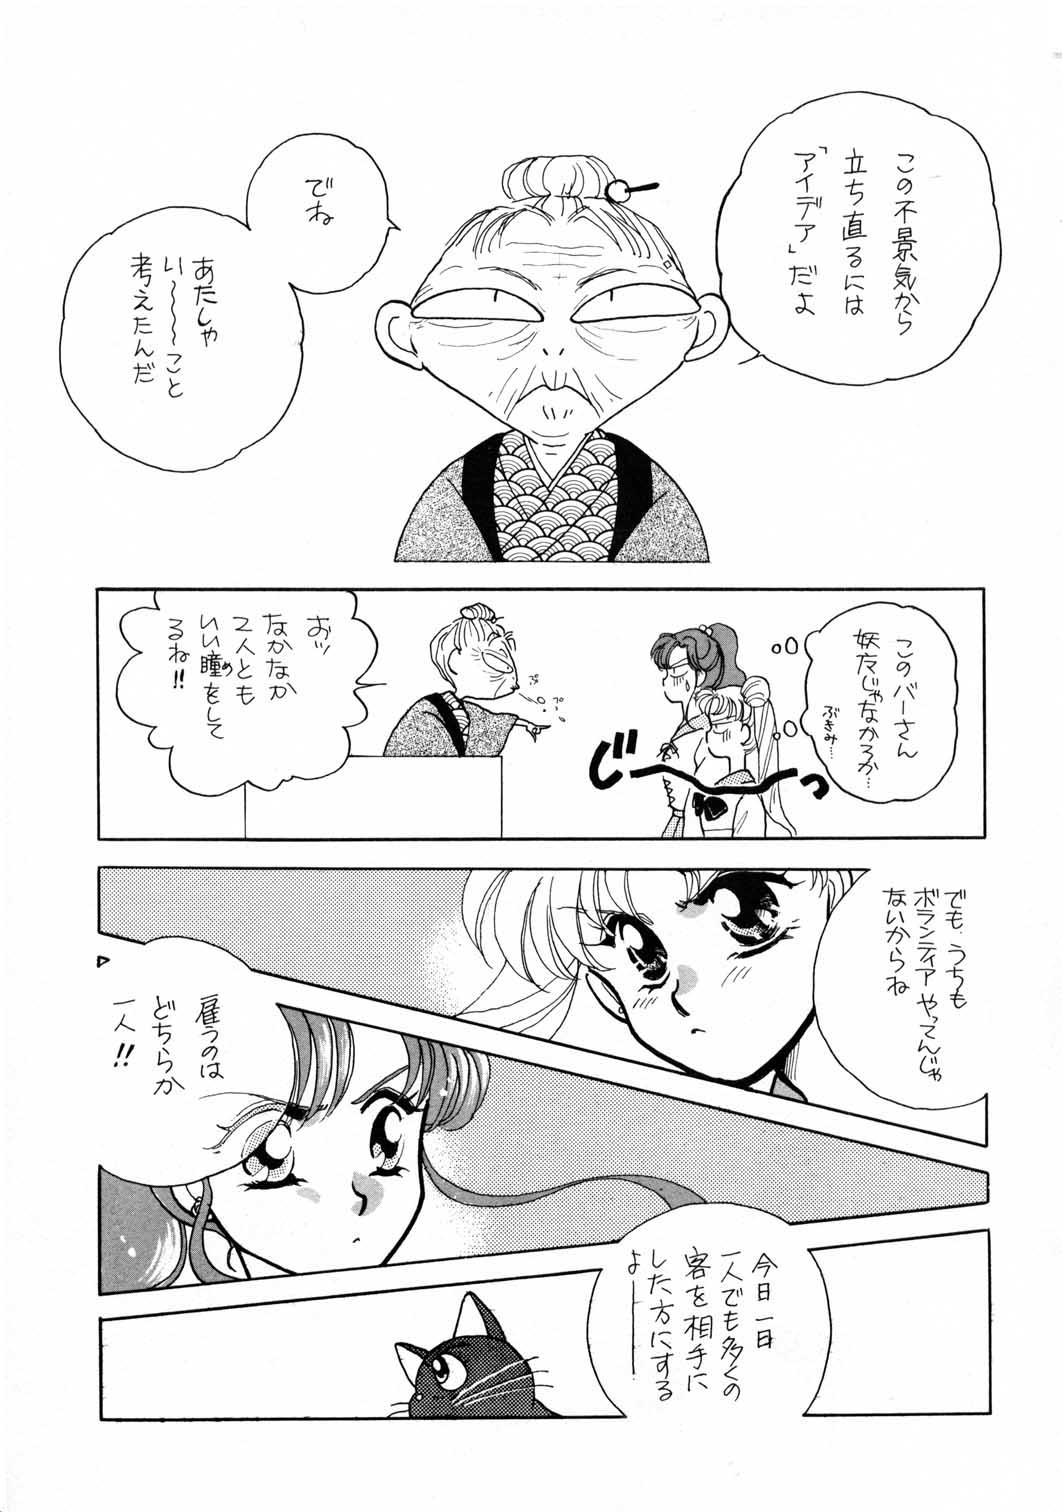 Making Love Porn Sailor Moon JodanJanaiyo - Sailor moon Hunk - Page 8